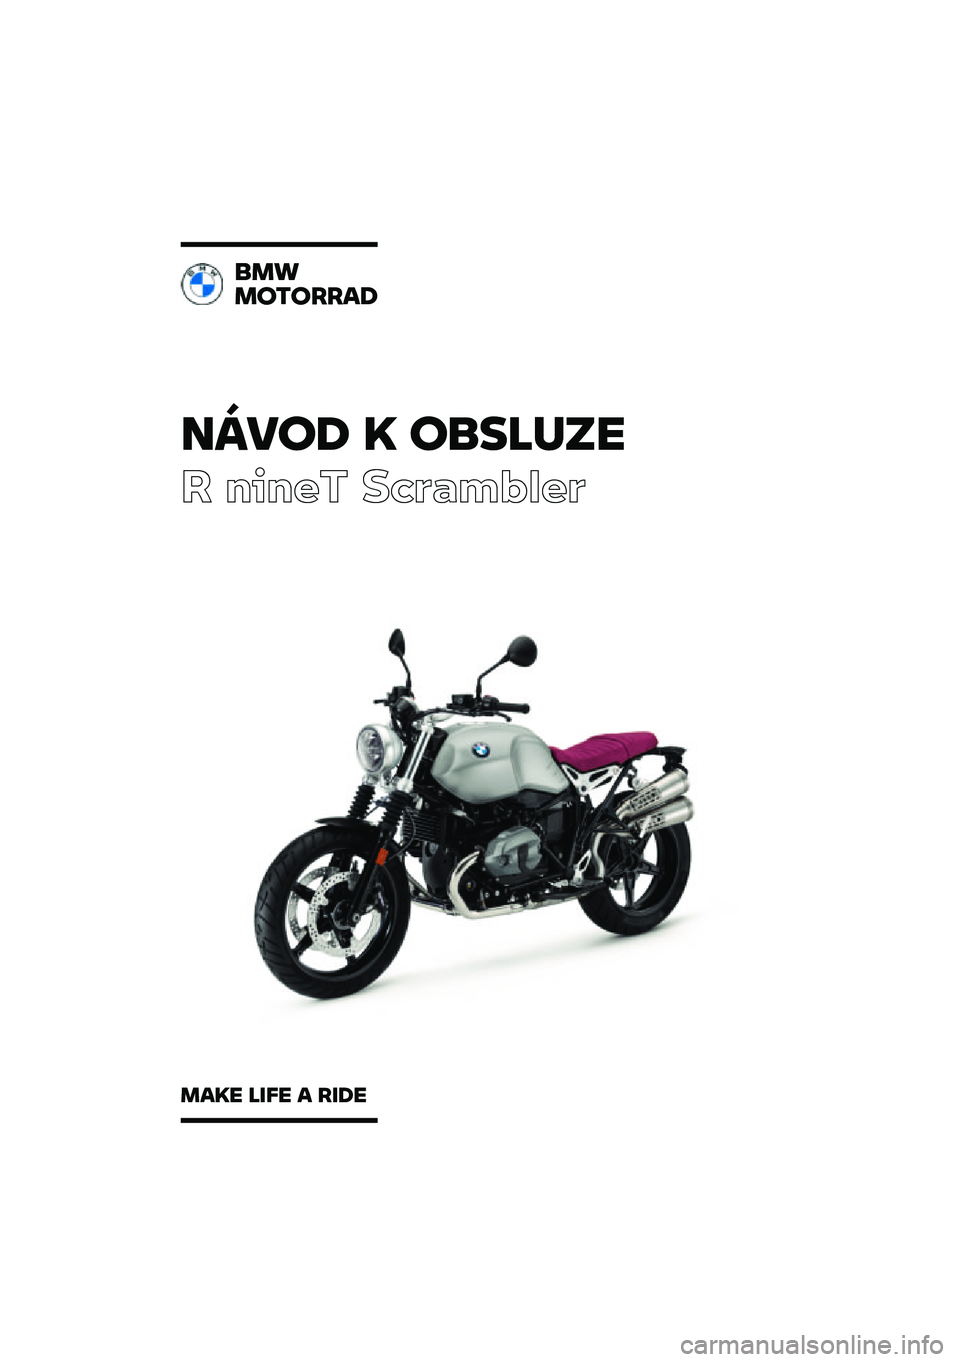 BMW MOTORRAD R NINE T SCRAMBLER 2021  Návod k obsluze (in Czech) �����\b �	 ��
��\f�
��
� ����� ��\b�	�
��\f�
��	
�
��
��������\b
���	� �\f��� � ���\b� 